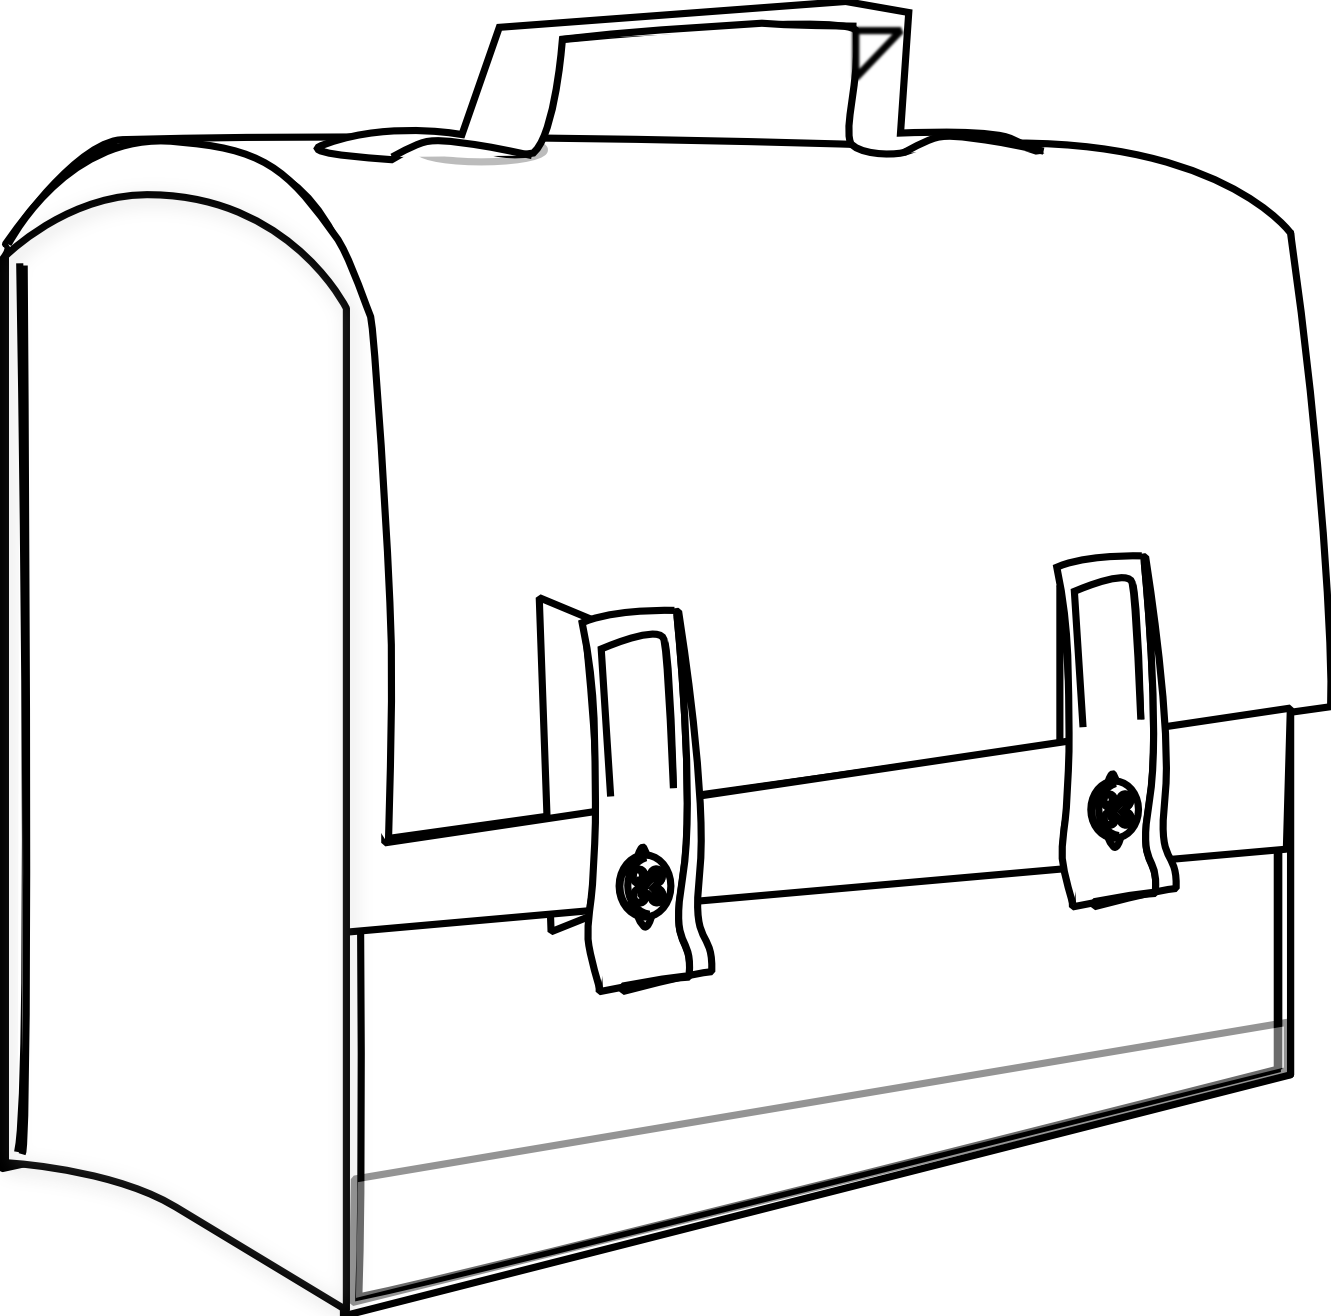 rg 1 24 Leather suitcase black white line art ...